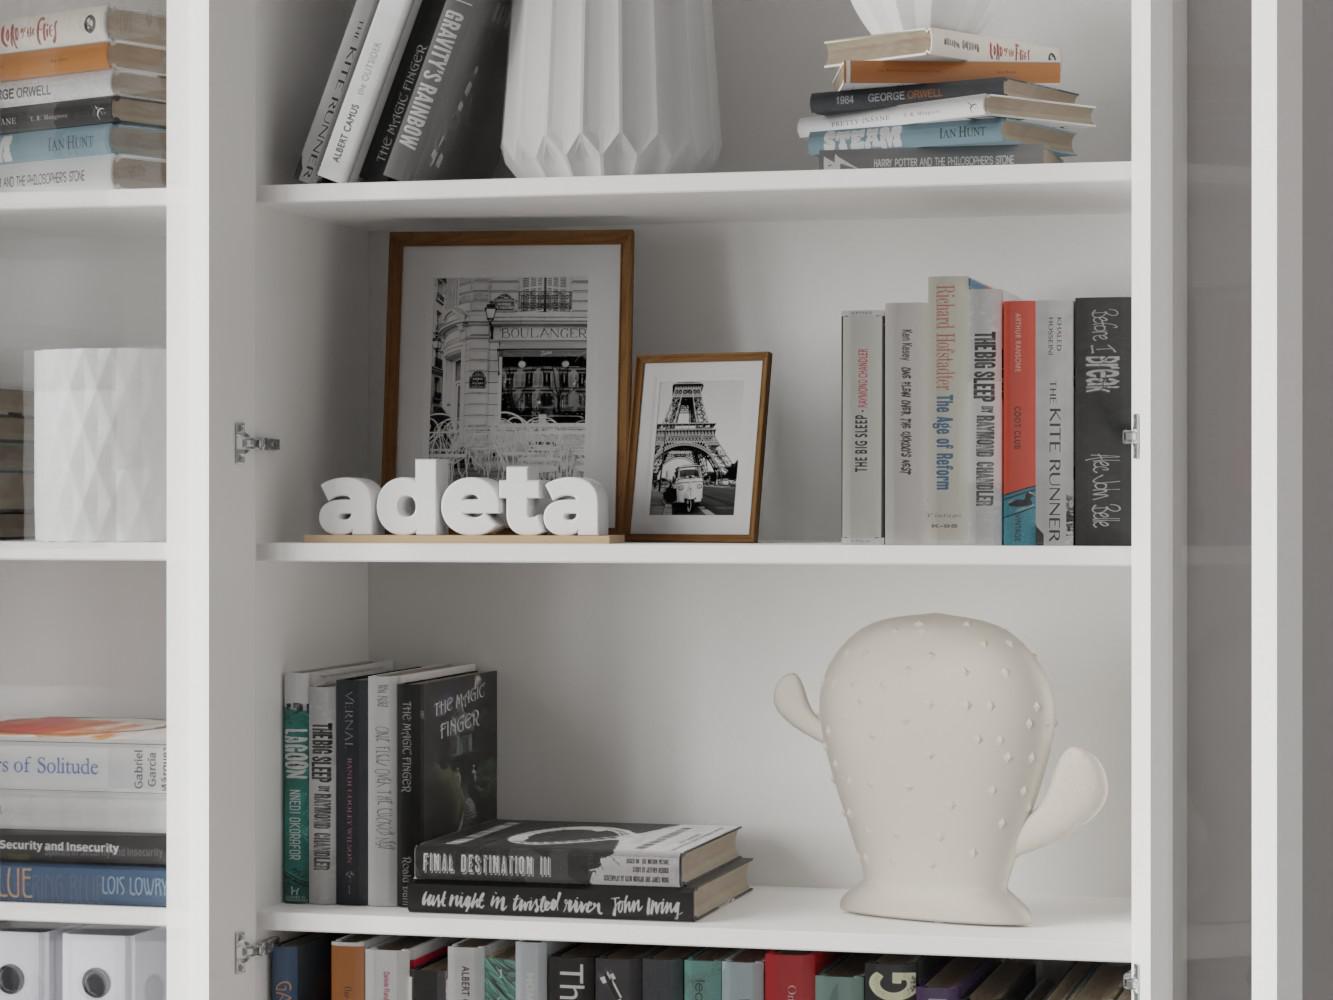  Книжный шкаф Билли 344 white ИКЕА (IKEA) изображение товара